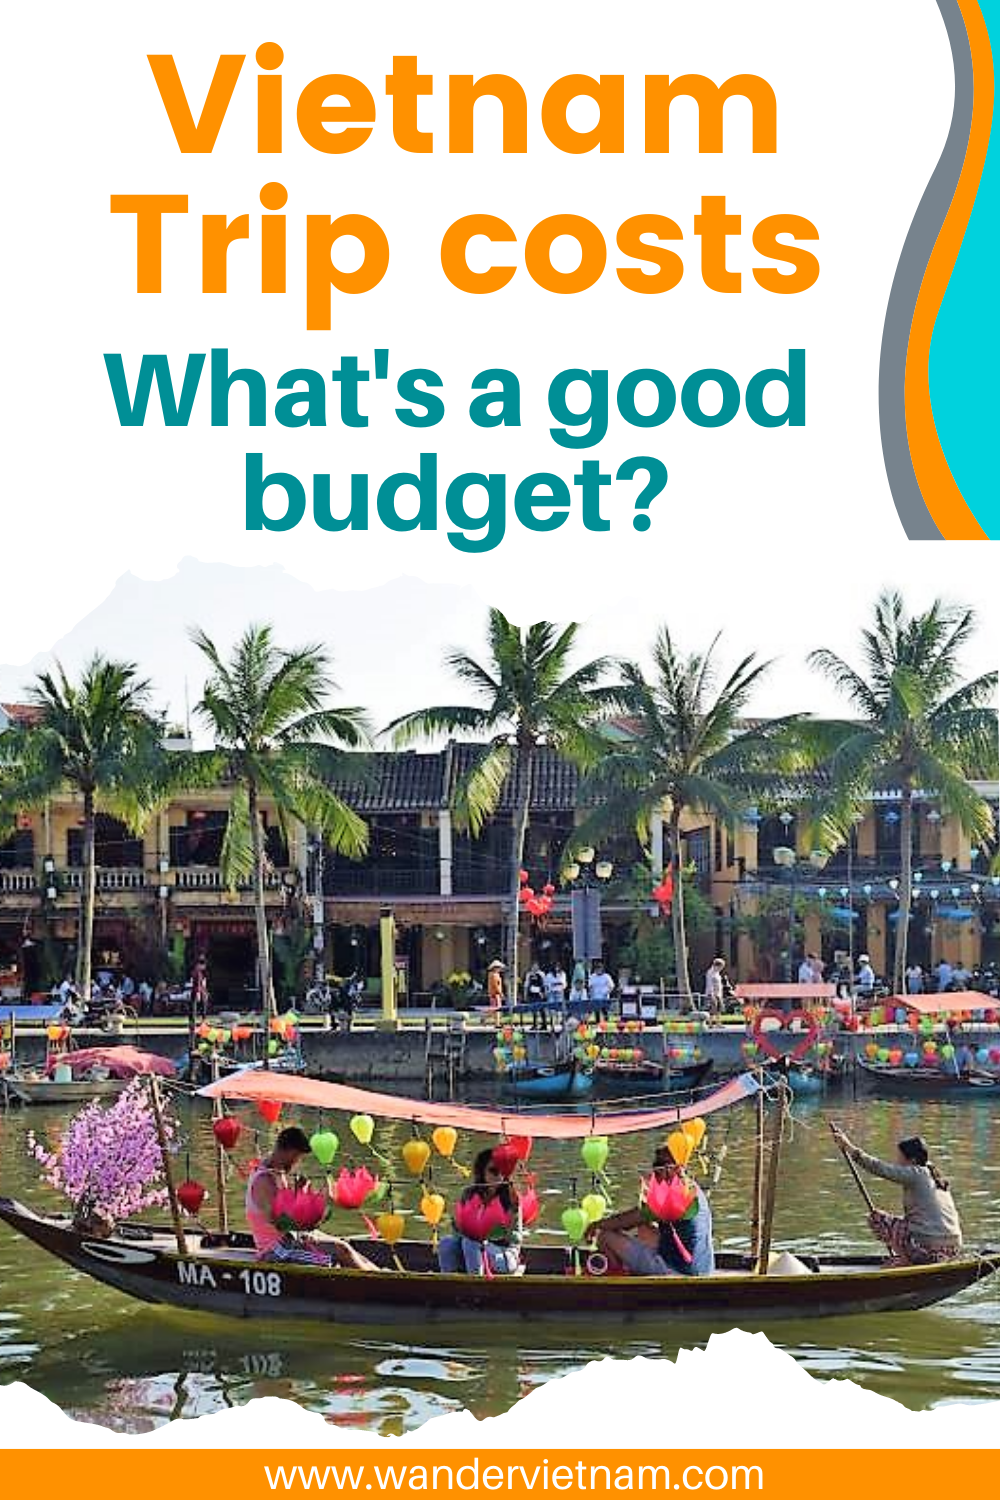 Vietnam Trip Cost Advice | What's a Good Budget for Vietnam?